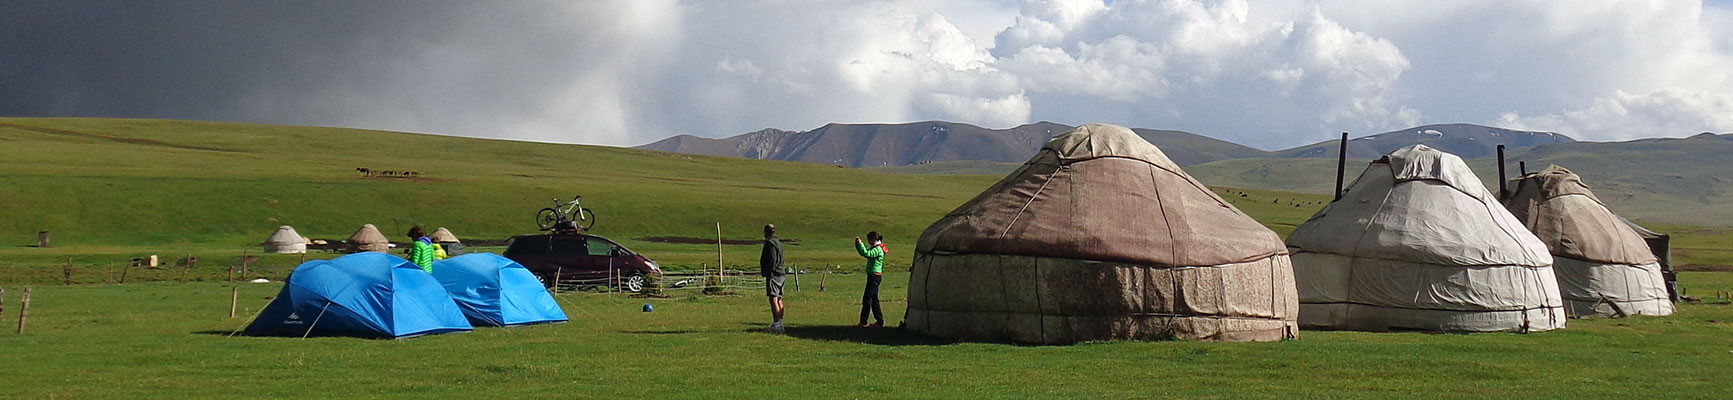 voyage kirghizistan, trek, randonnée, ski de randonnée et découverte culturelle, randonnée kirghizistan